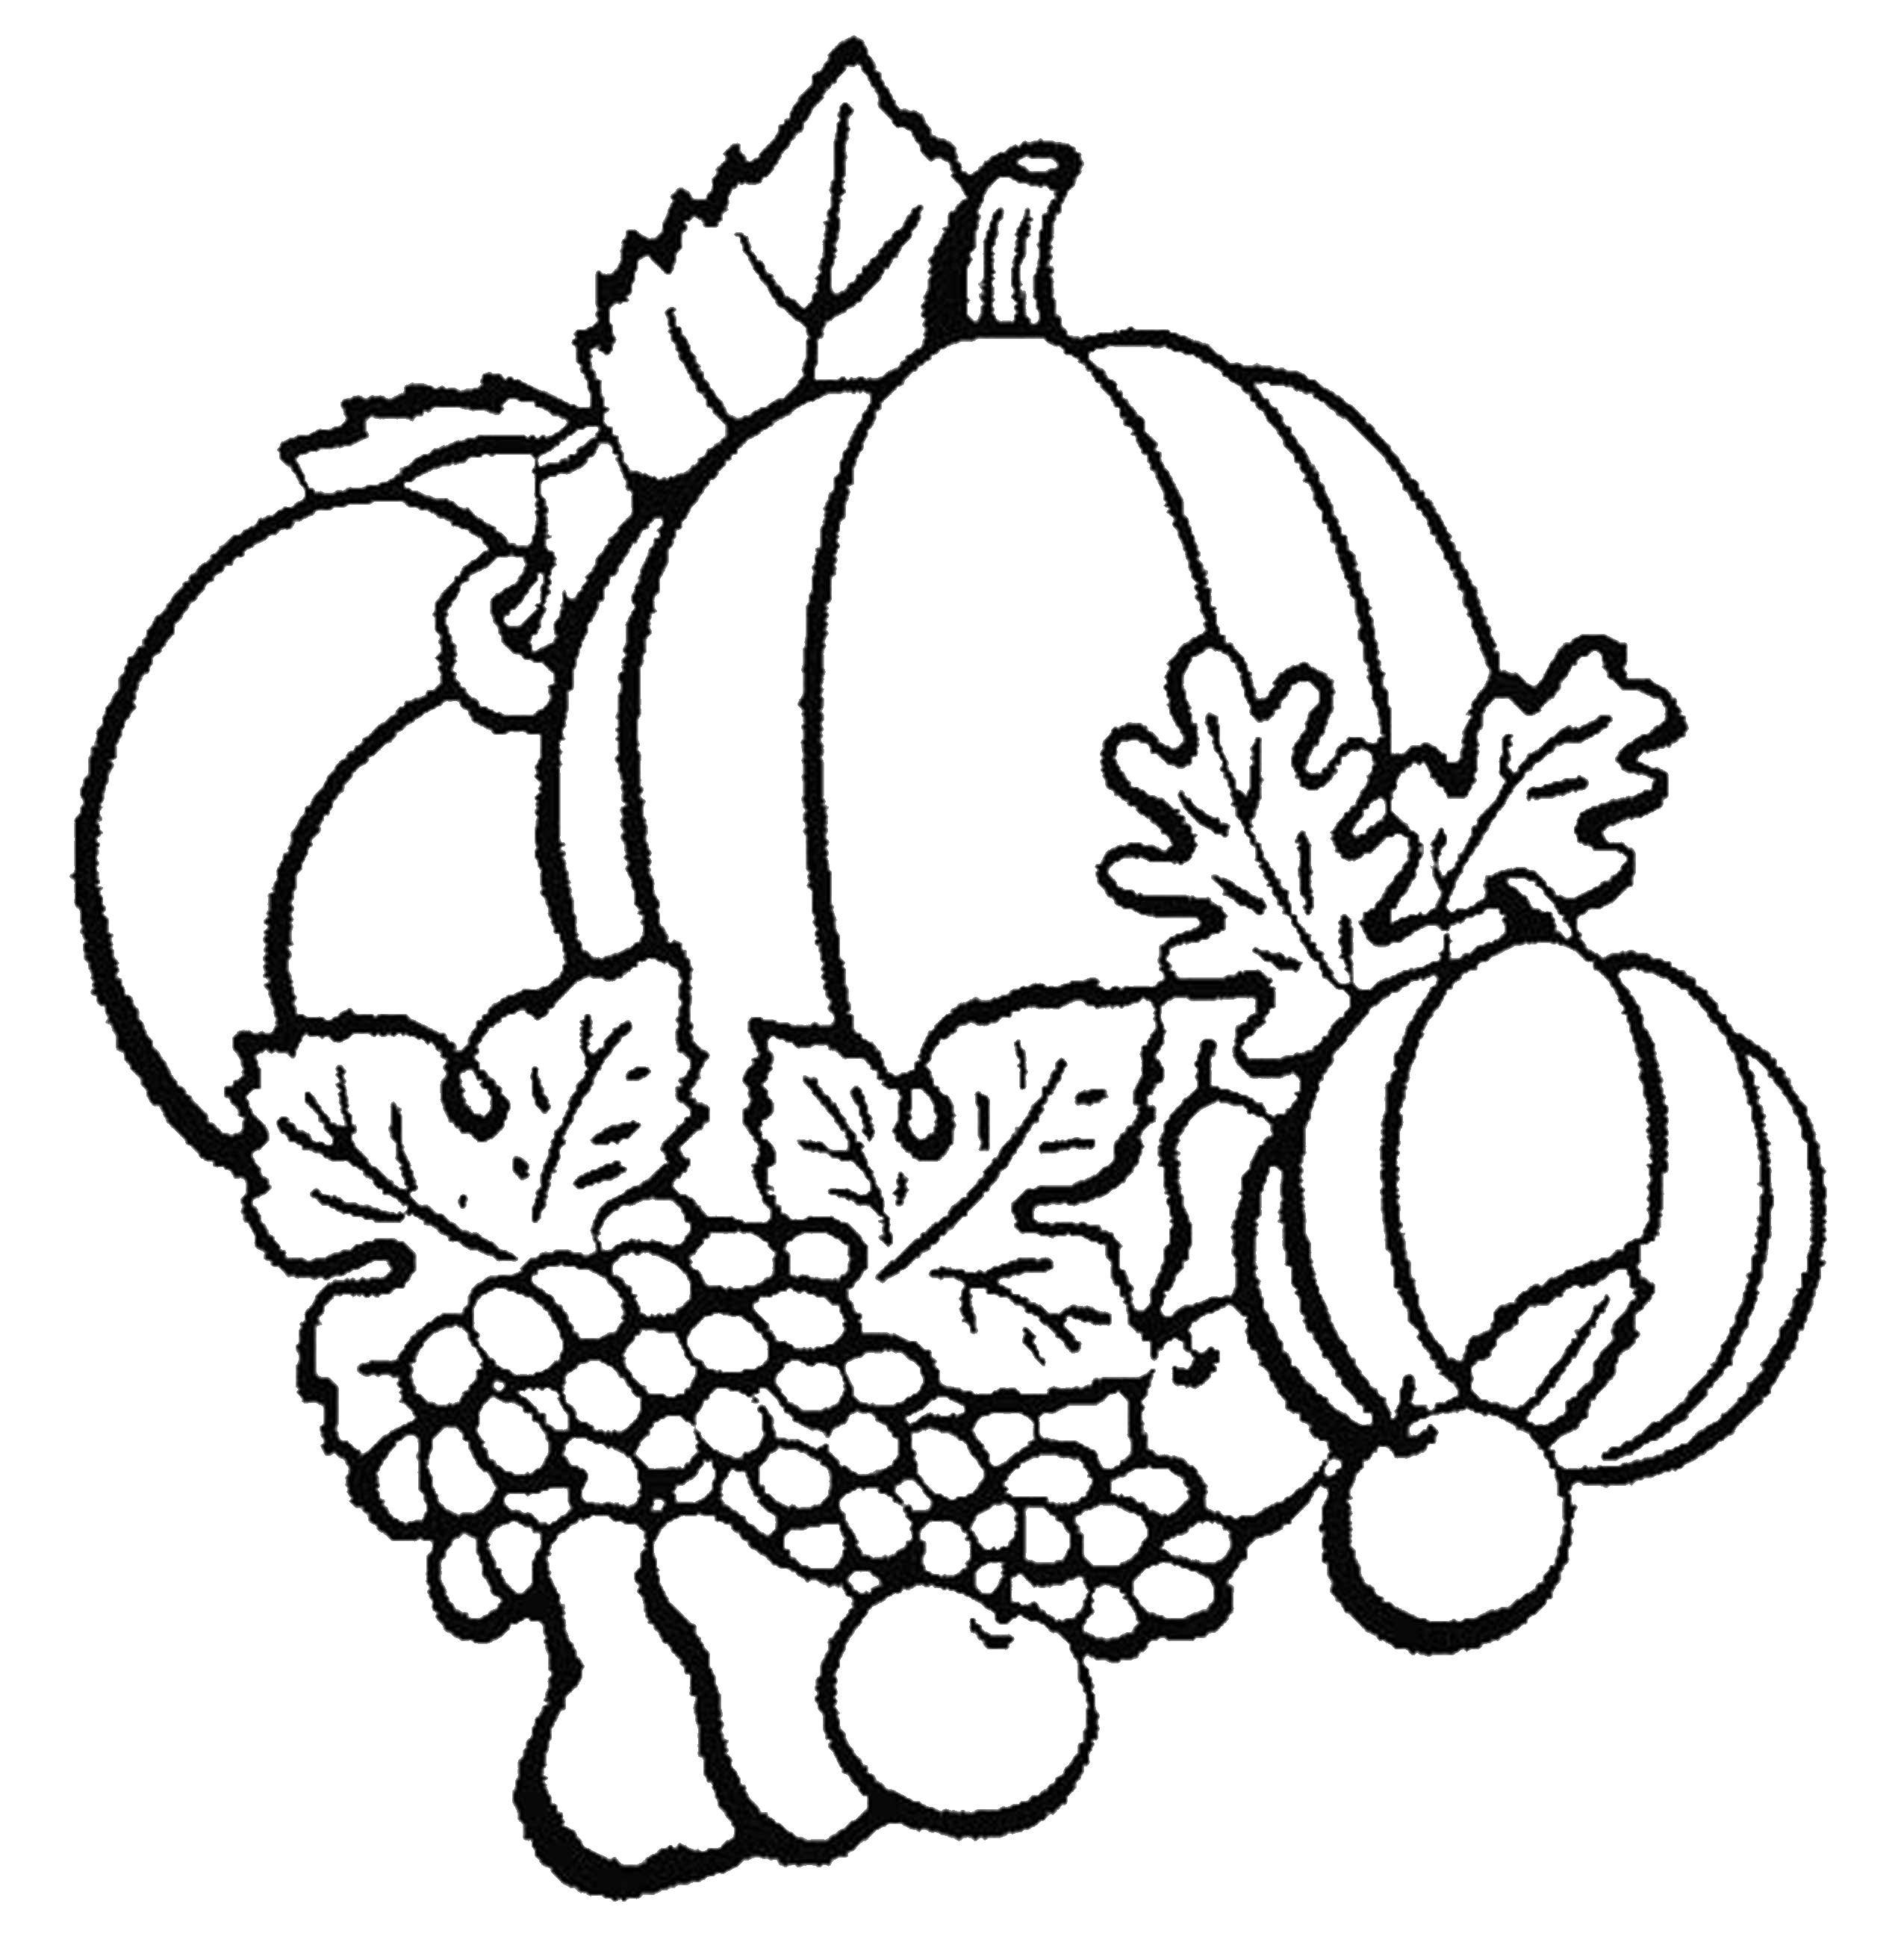 Coloring Pumpkin, fruit, grapes. Category Autumn. Tags:  harvest, pumpkins, grapes, apples.